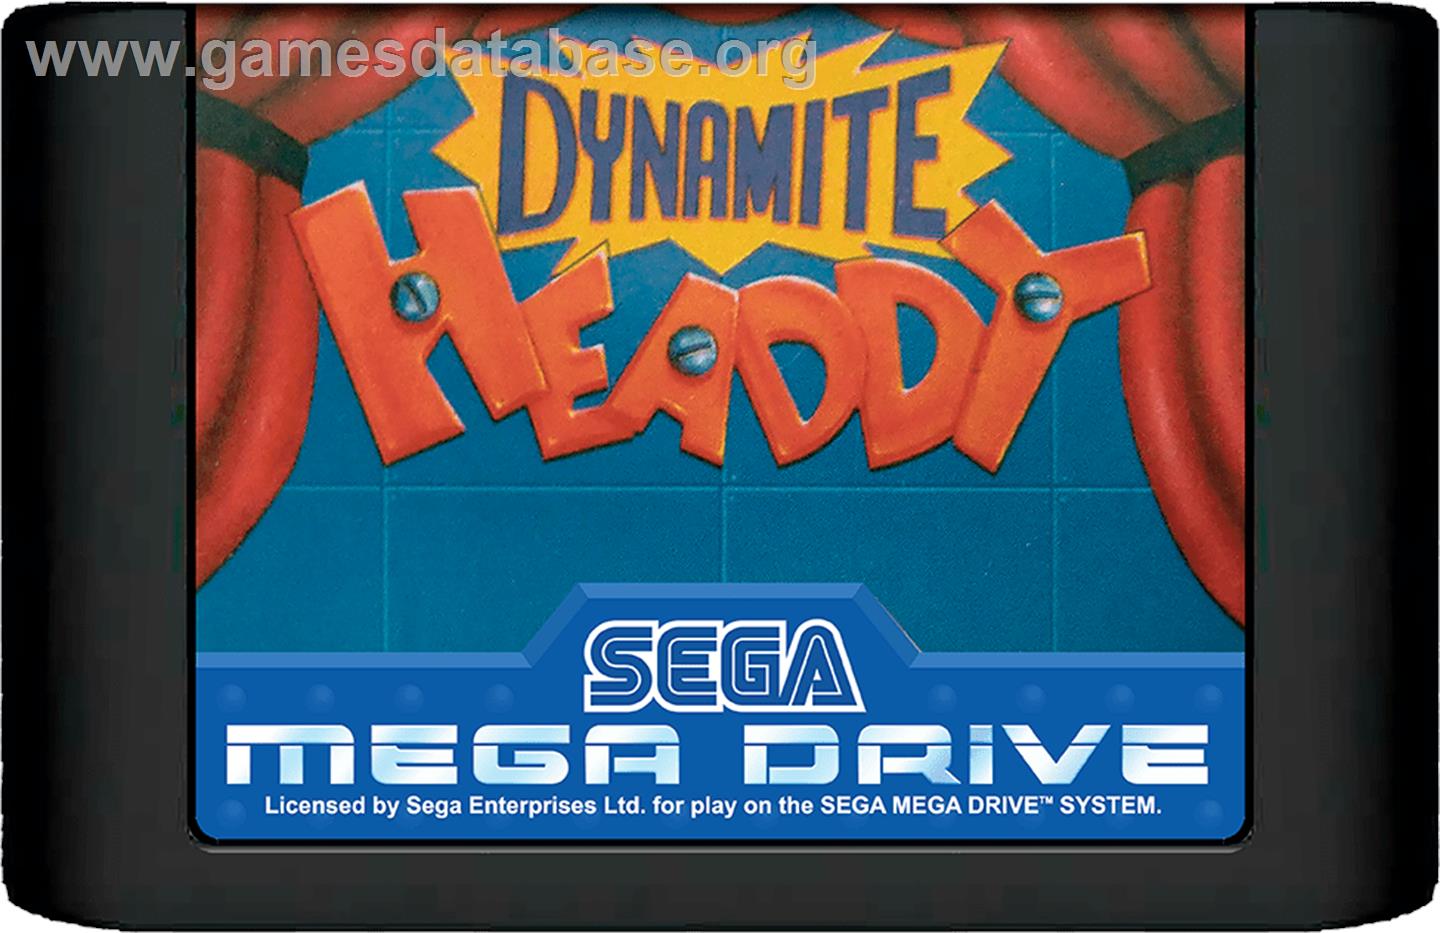 Dynamite Headdy - Sega Genesis - Artwork - Cartridge